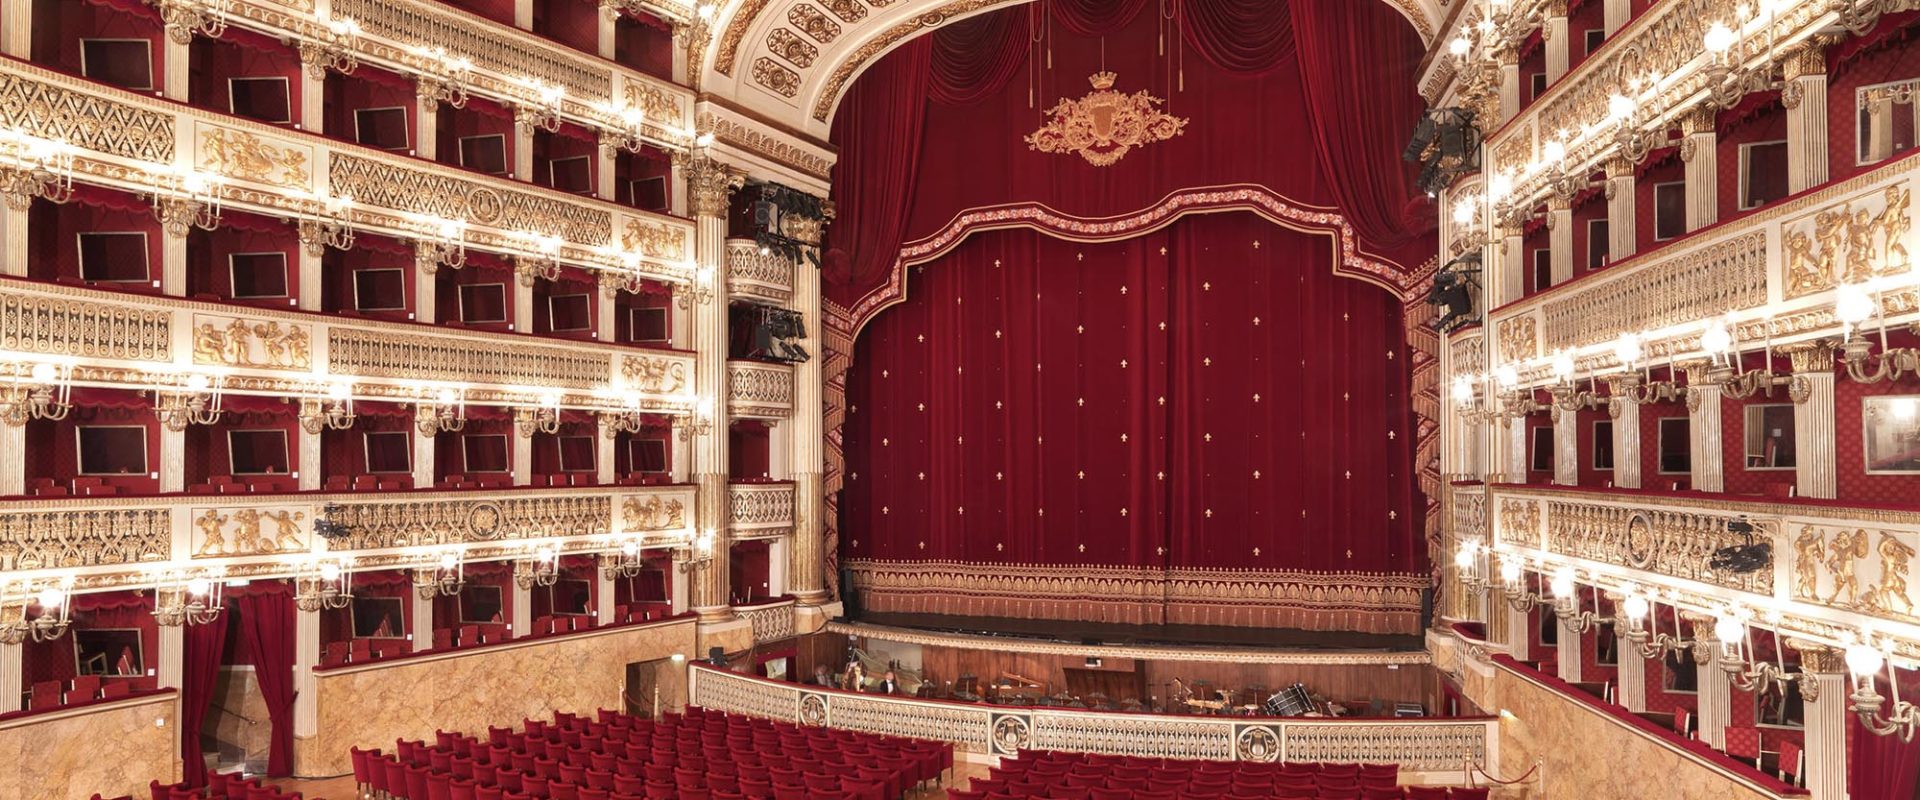 Teatro Real San Carlo